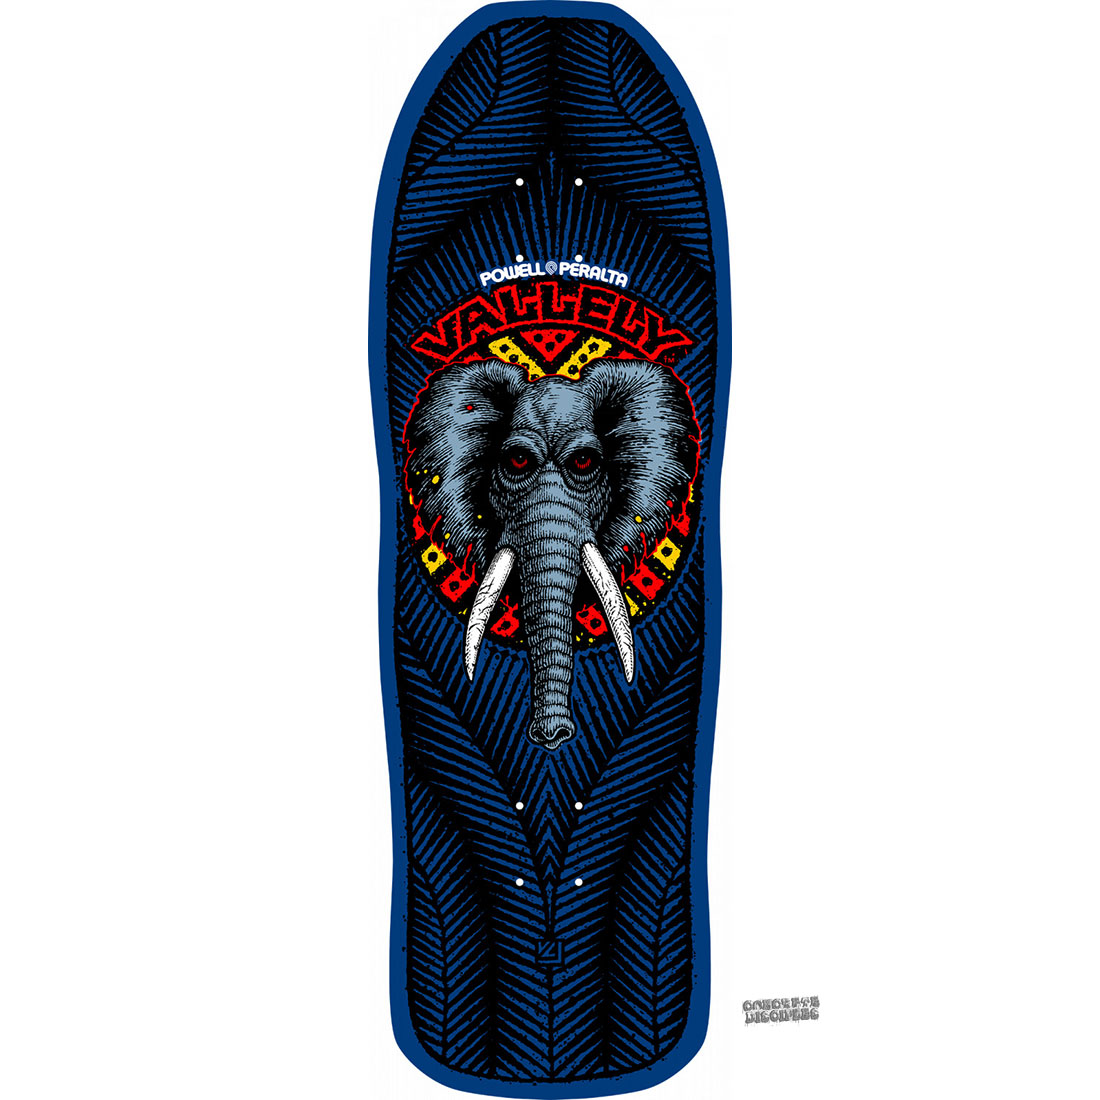 Powell Peralta Mike Vallely Elephant Skateboard Deck Navy